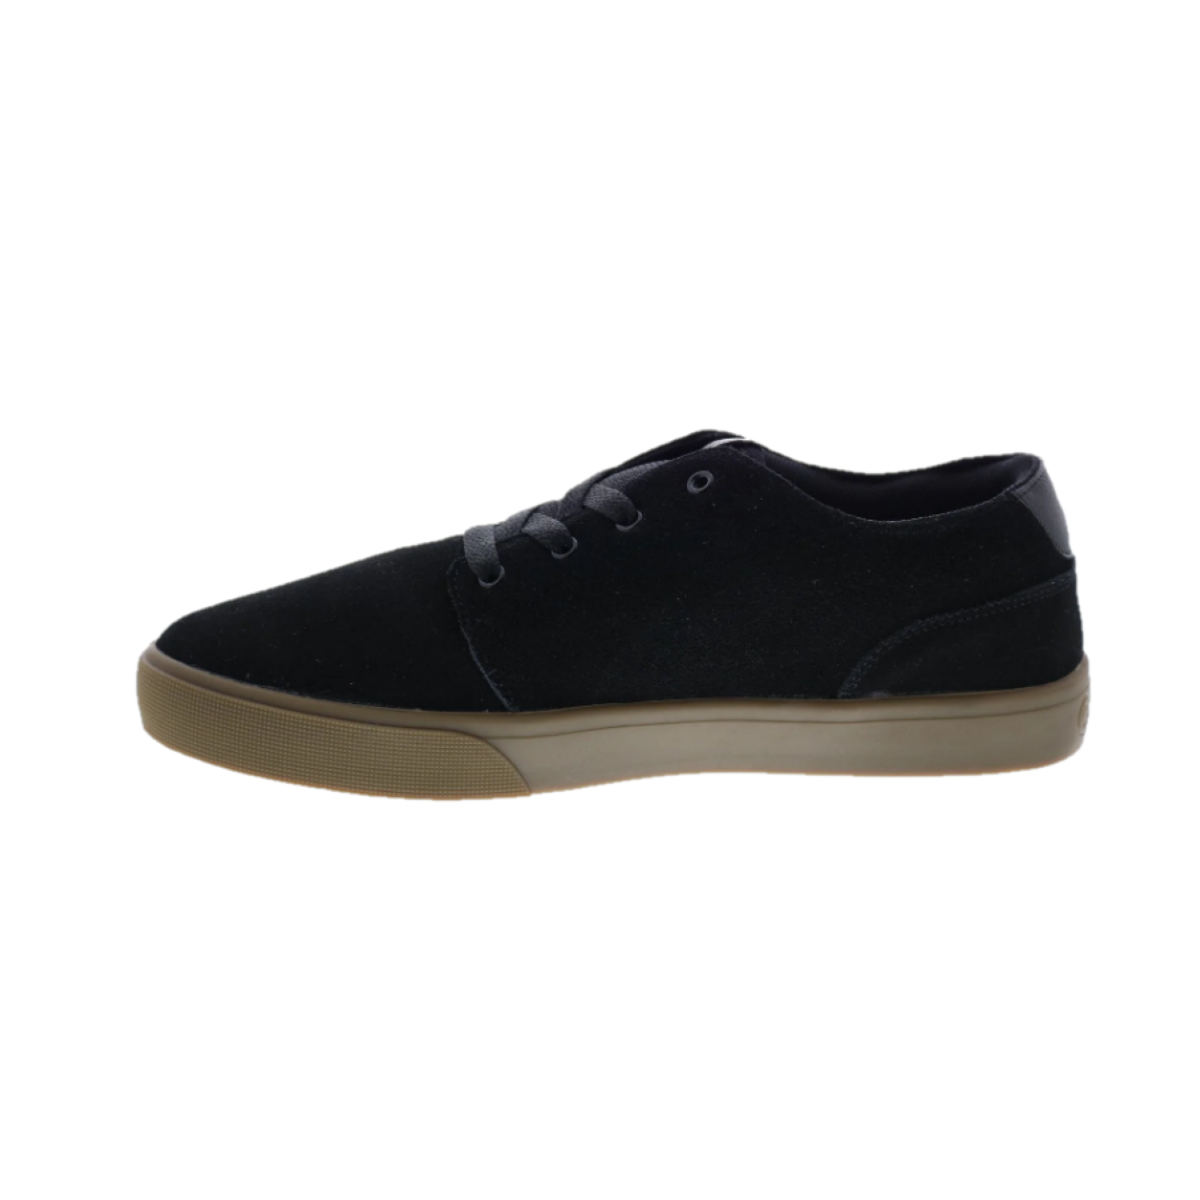 OSIRIS 13572700 BENTLEY VLC MN'S (Medium) Black/Dark Gum Suede Skate Shoes